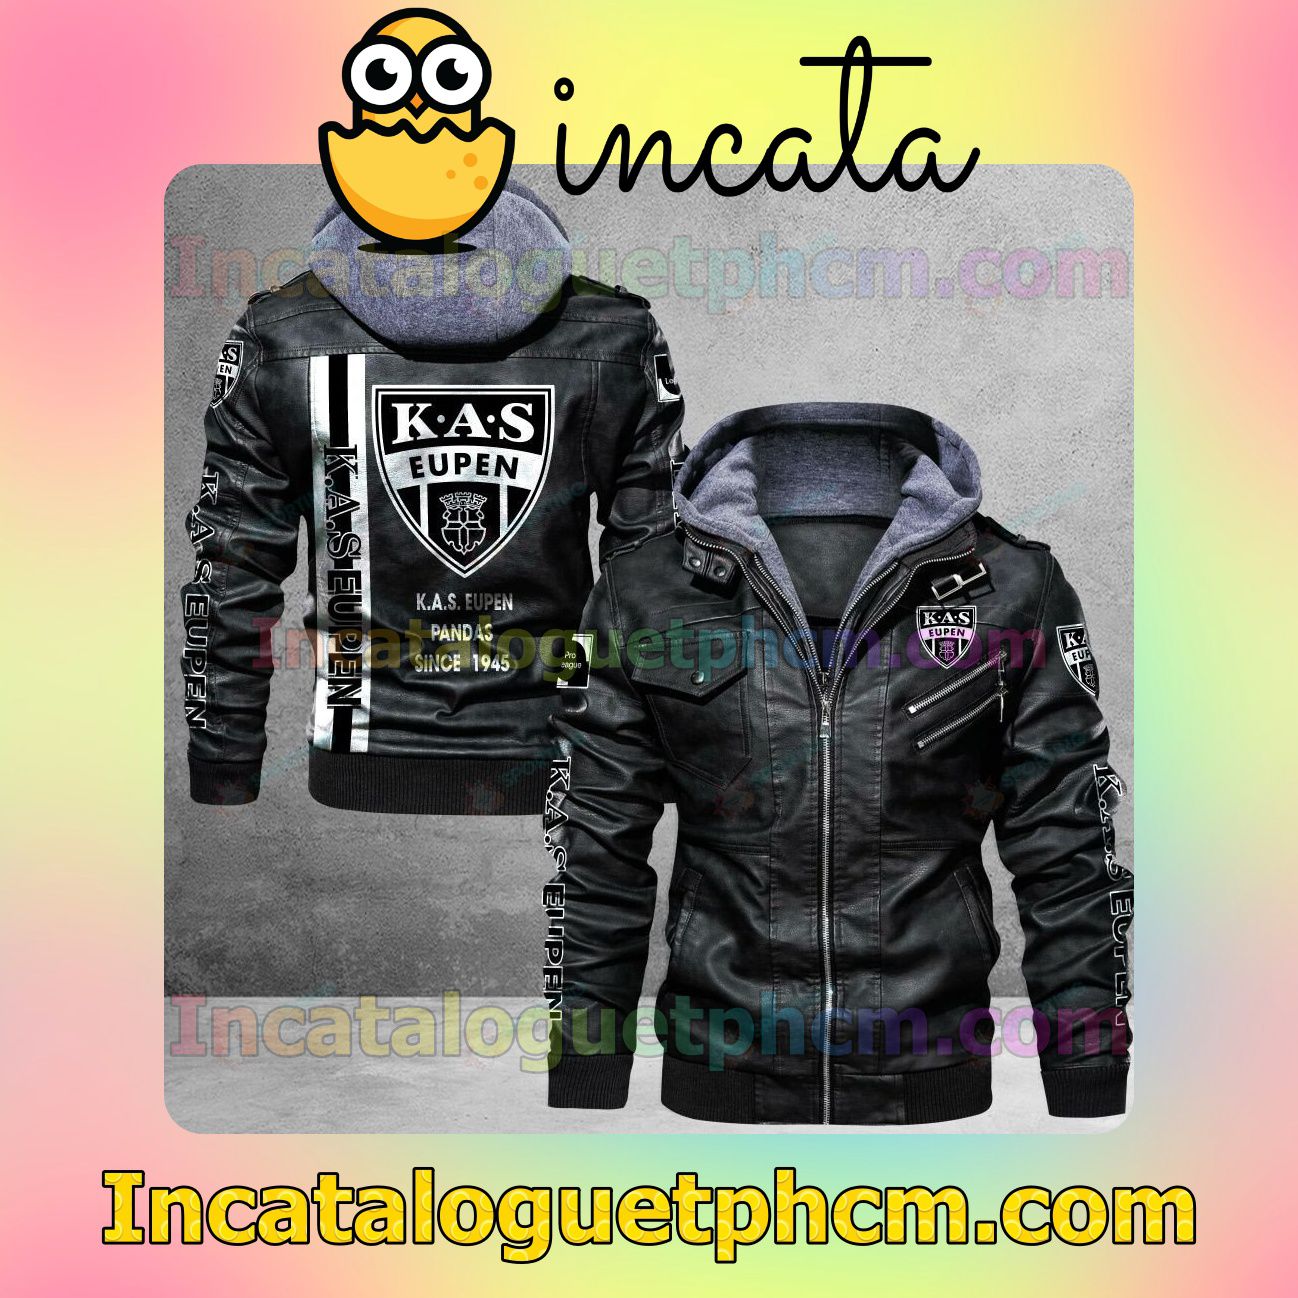 K.A.S. Eupen Brand Uniform Leather Jacket